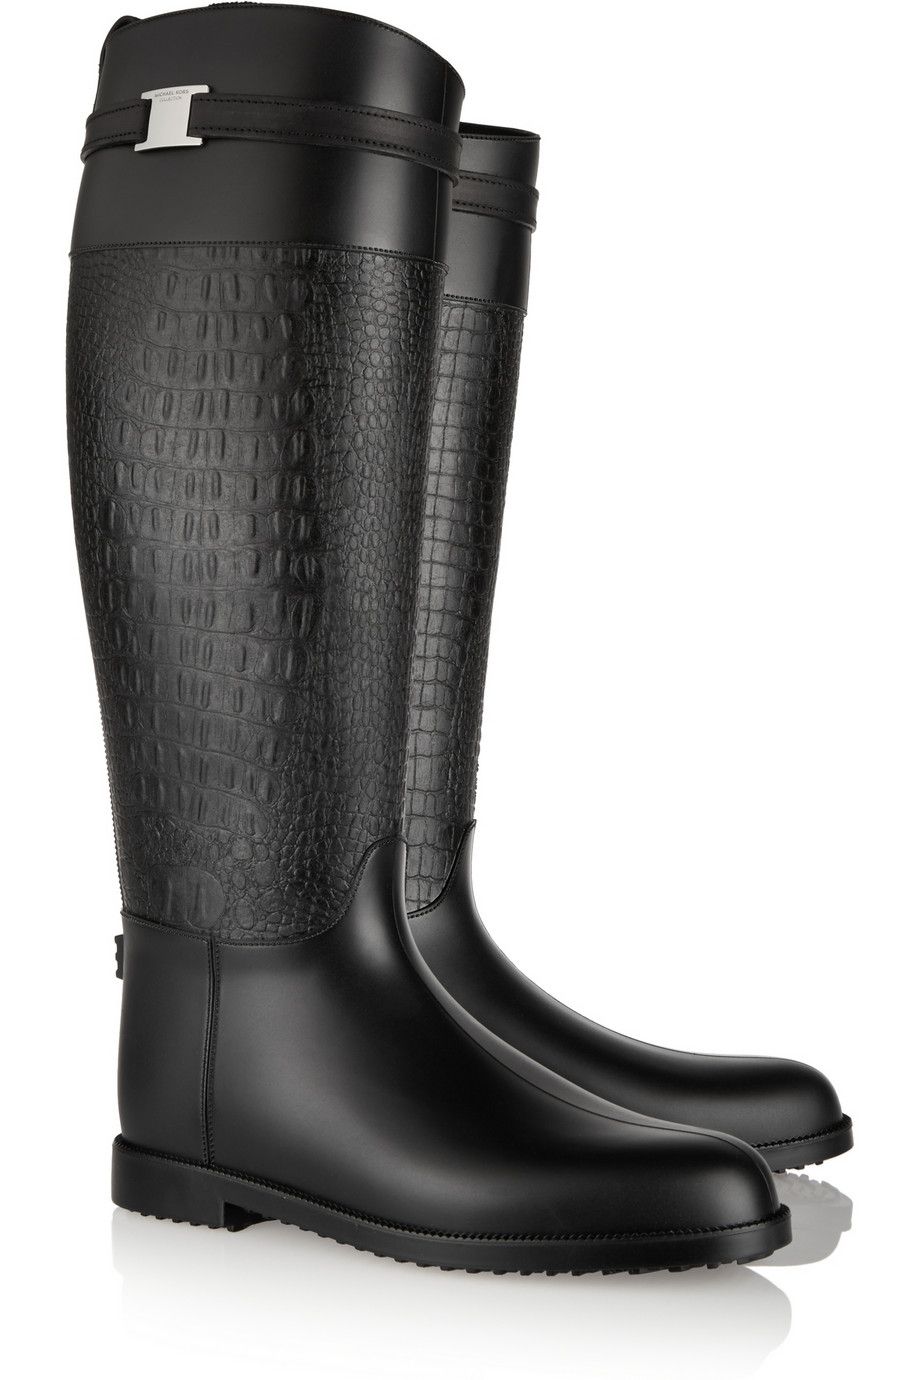 michael kors rain boots 2015